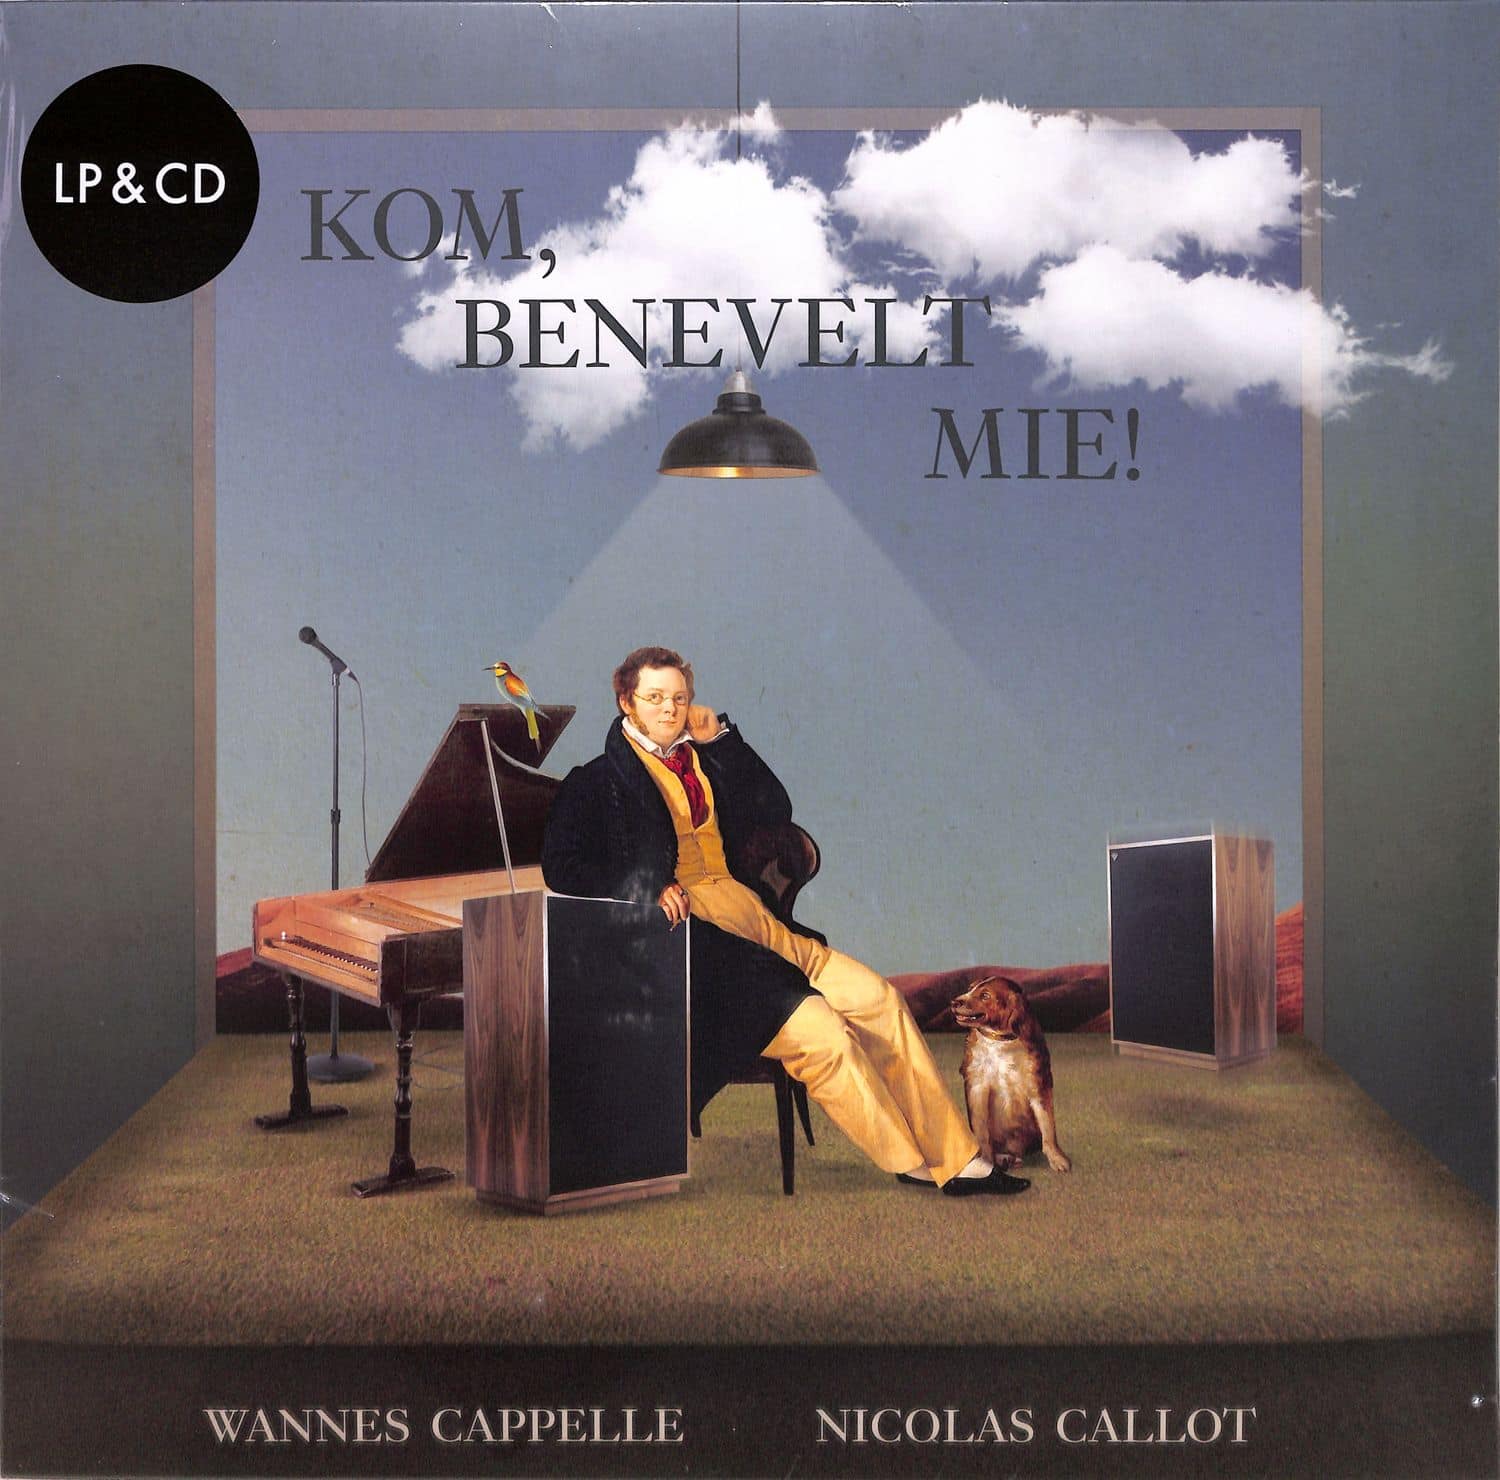 Wannes Cappelle & Nicolas Callot - KOM, BENEVELT MIE! 